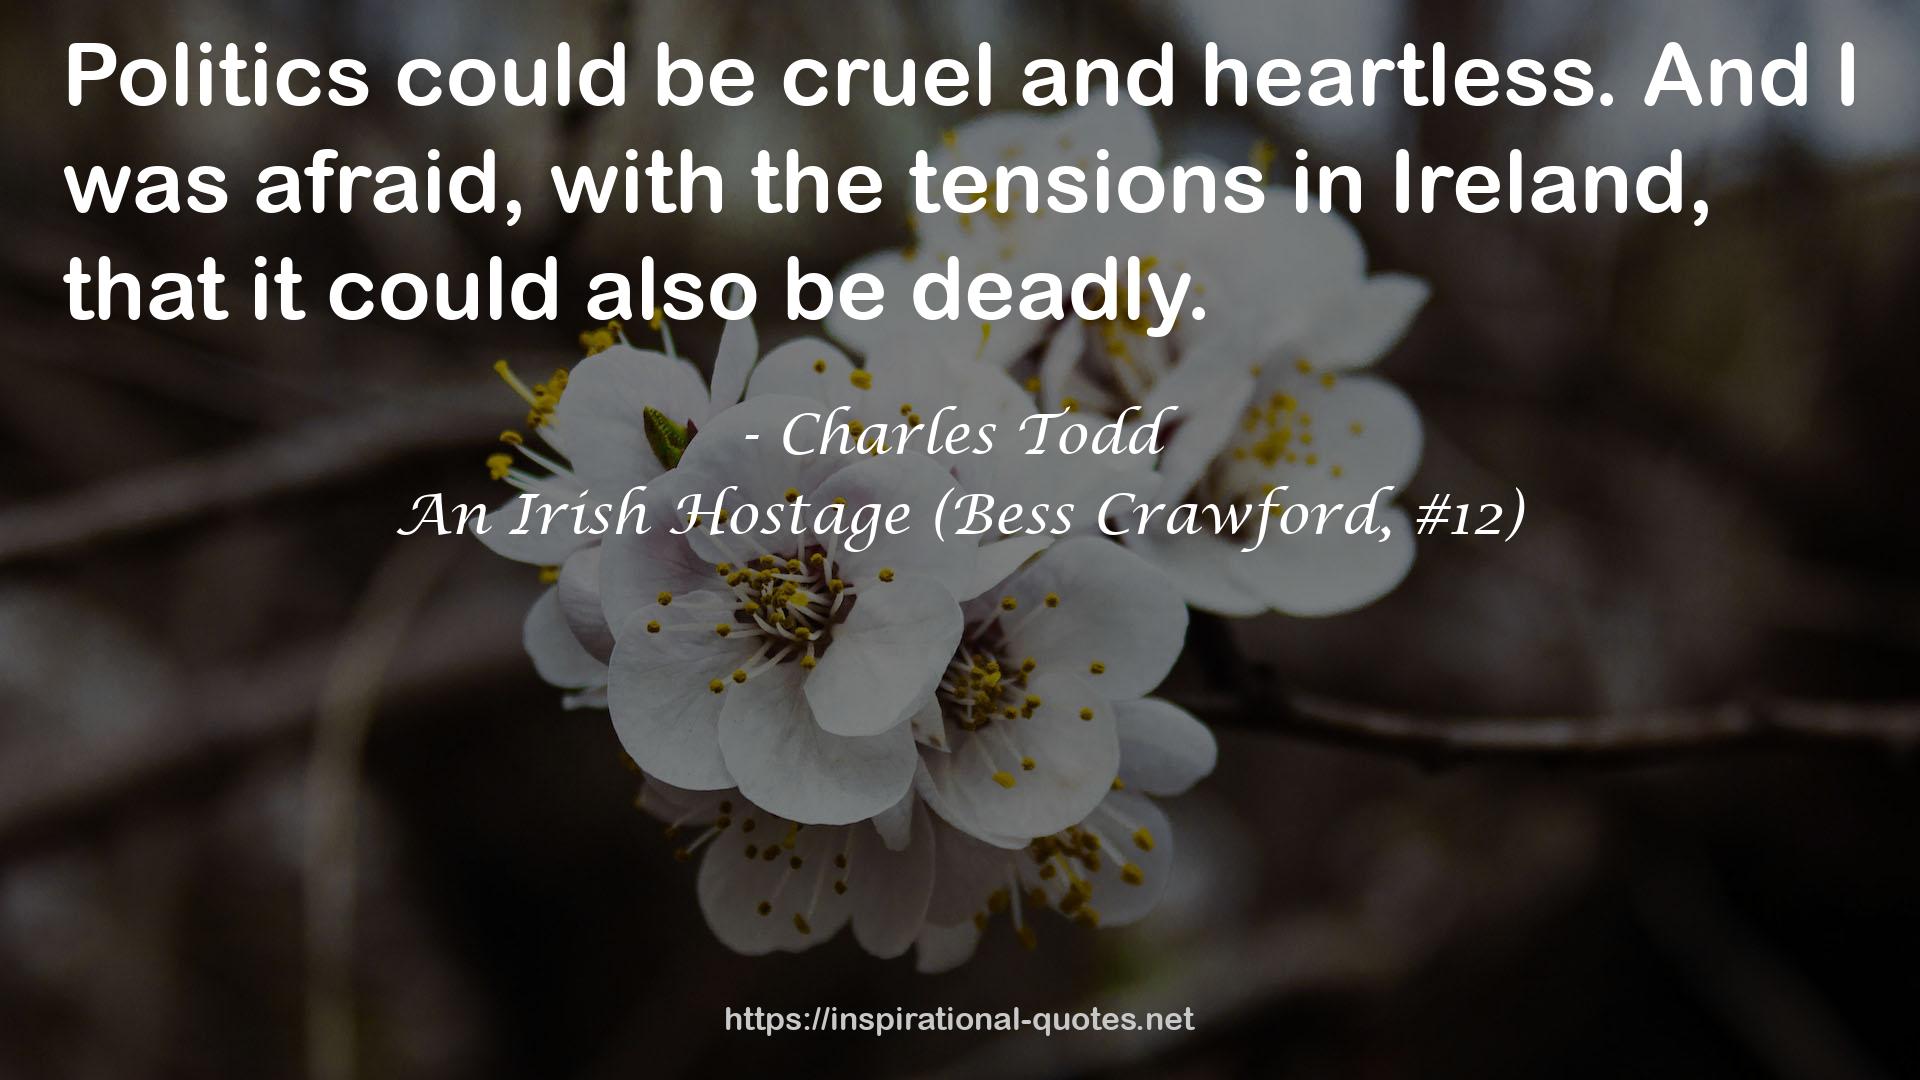 An Irish Hostage (Bess Crawford, #12) QUOTES